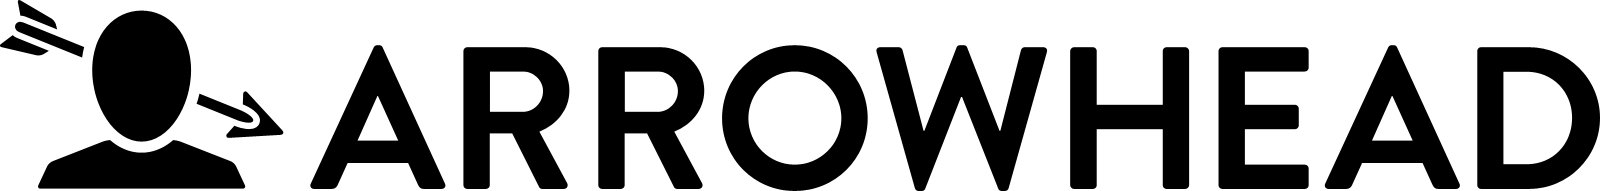 arrowhead logo standard black 1